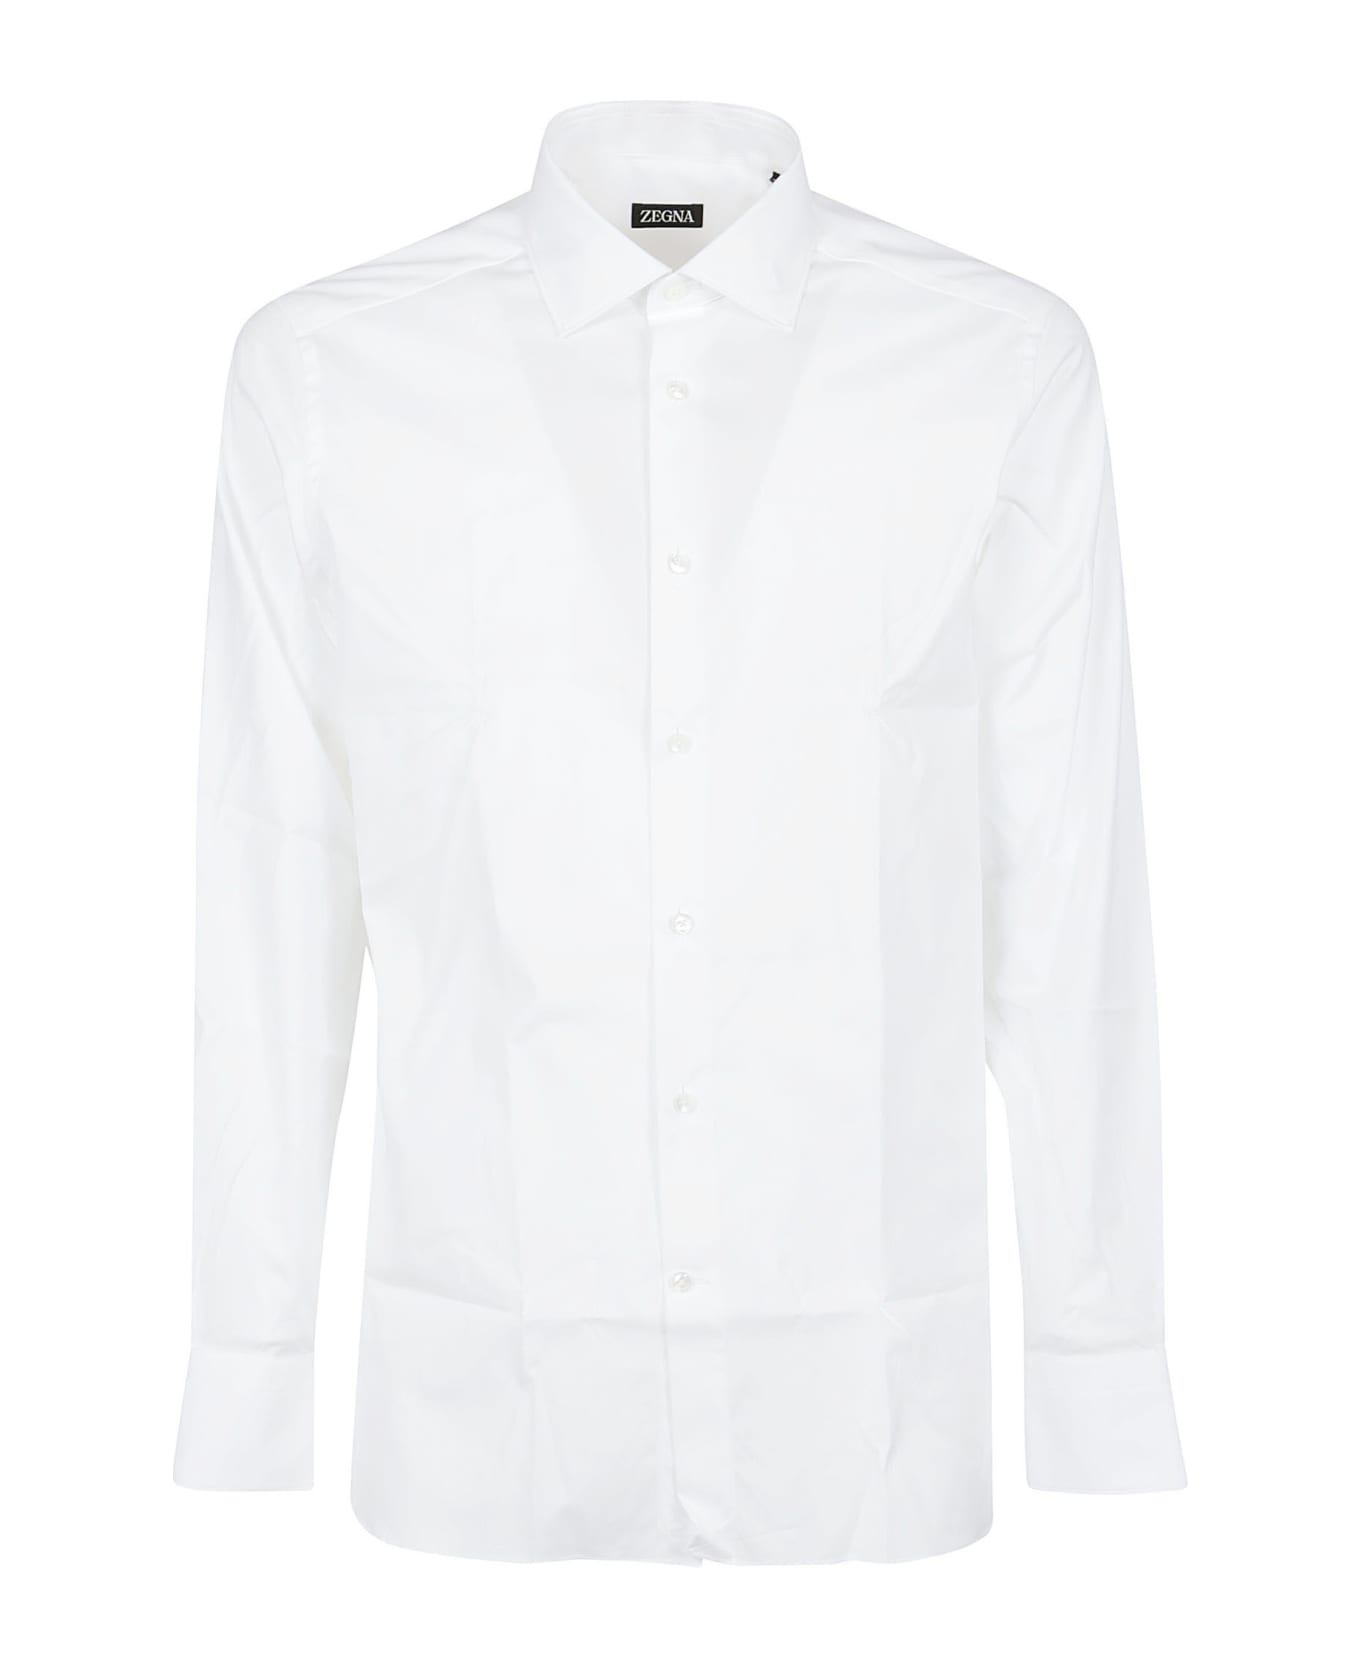 Ermenegildo Zegna Lux Tailoring Long Sleeve Shirt - Bianco